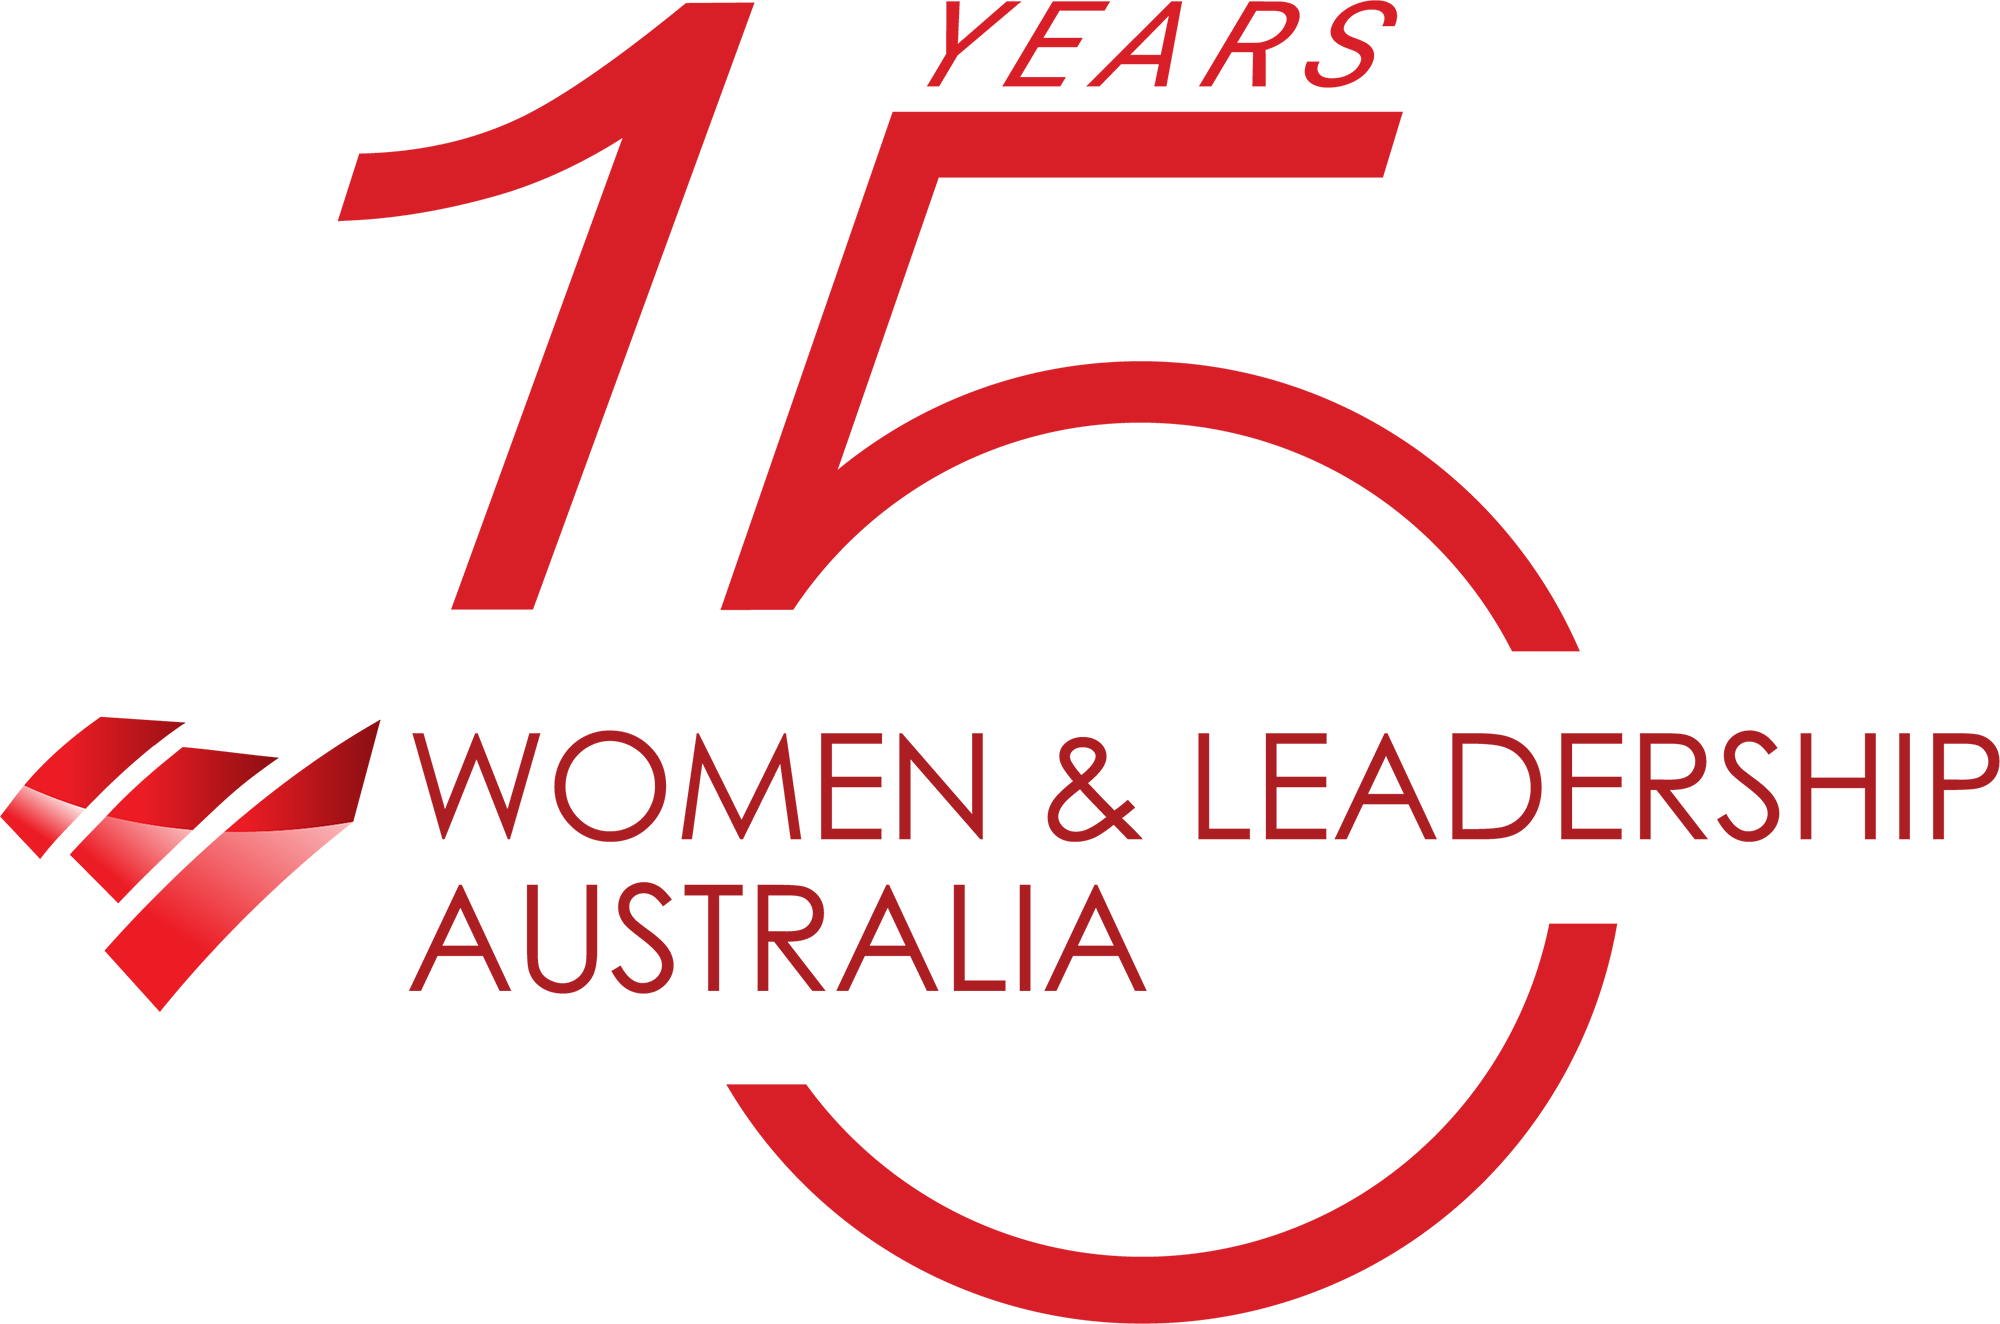 wla 15 years logo